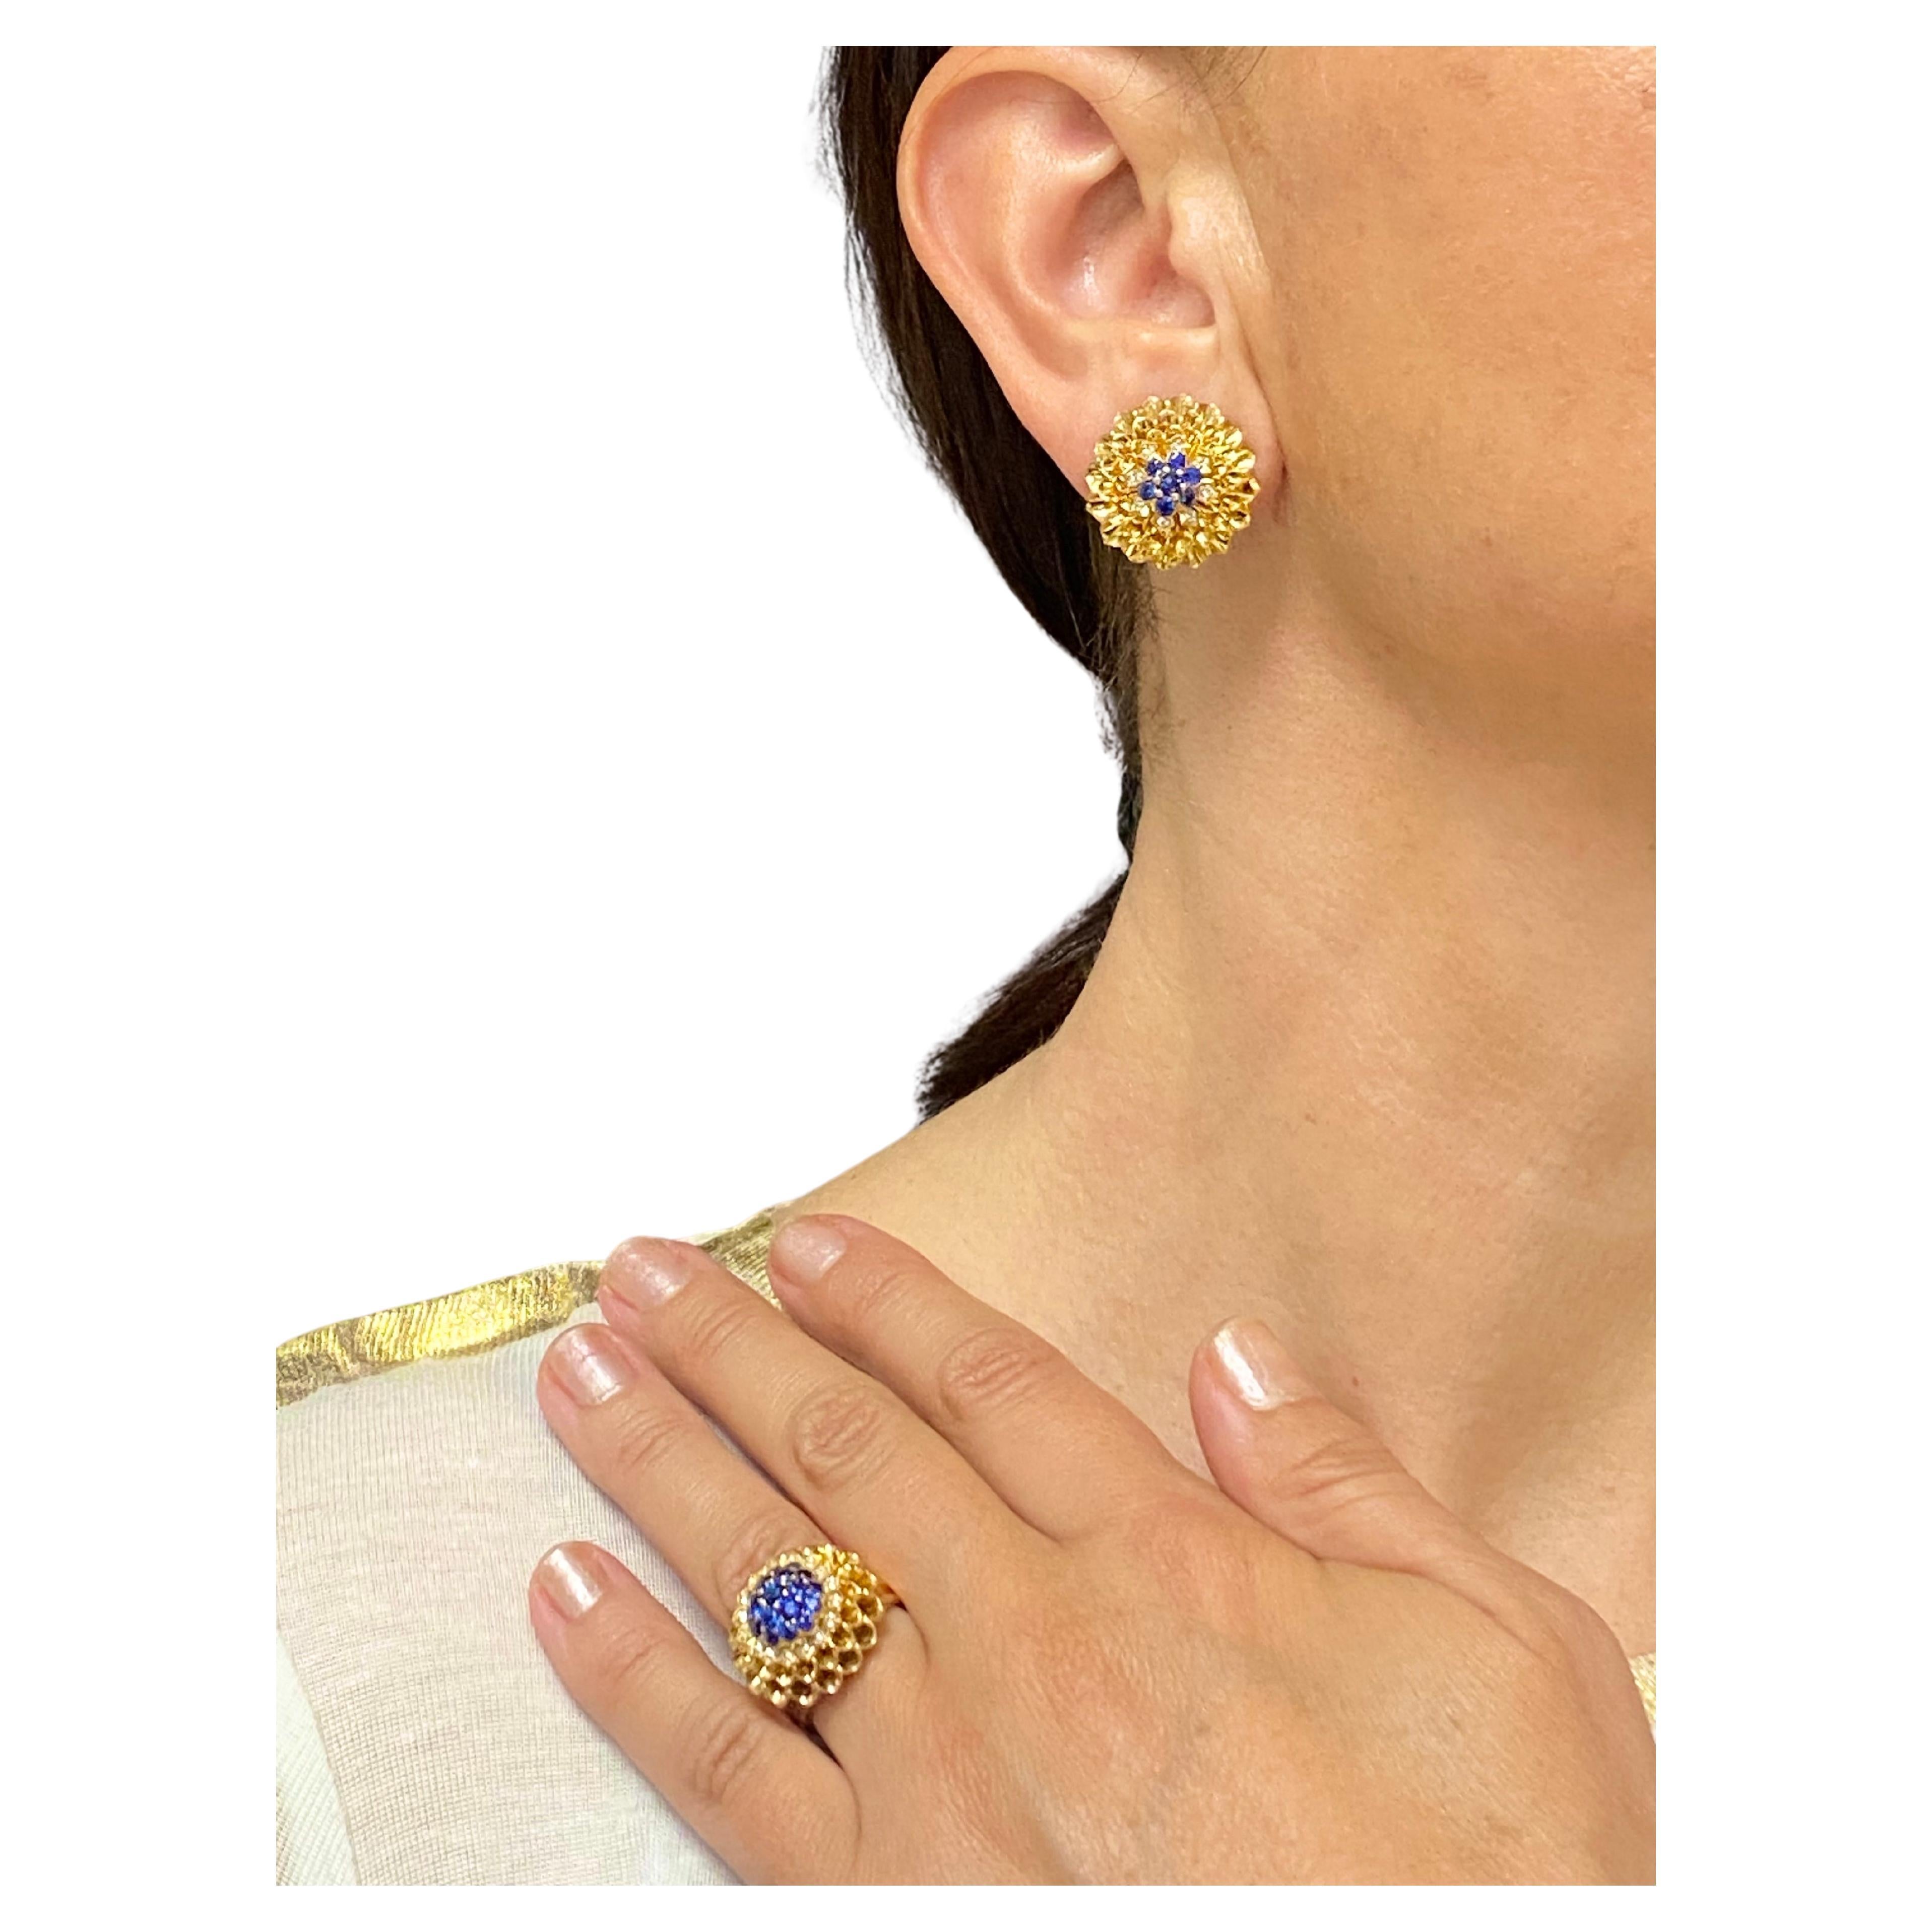 DESIGNER: Tiffany & Co.
CIRCA: 1970’s
MATERIALS: 14k Yellow Gold
GEMSTONE: Round Brilliant Cut Diamond
GEMSTONE: Sapphire 
WEIGHT: Ring - 13.3 grams, Earrings - 16.8 grams
MEASUREMENTS: Diameter Ring and Earrings - 3/4